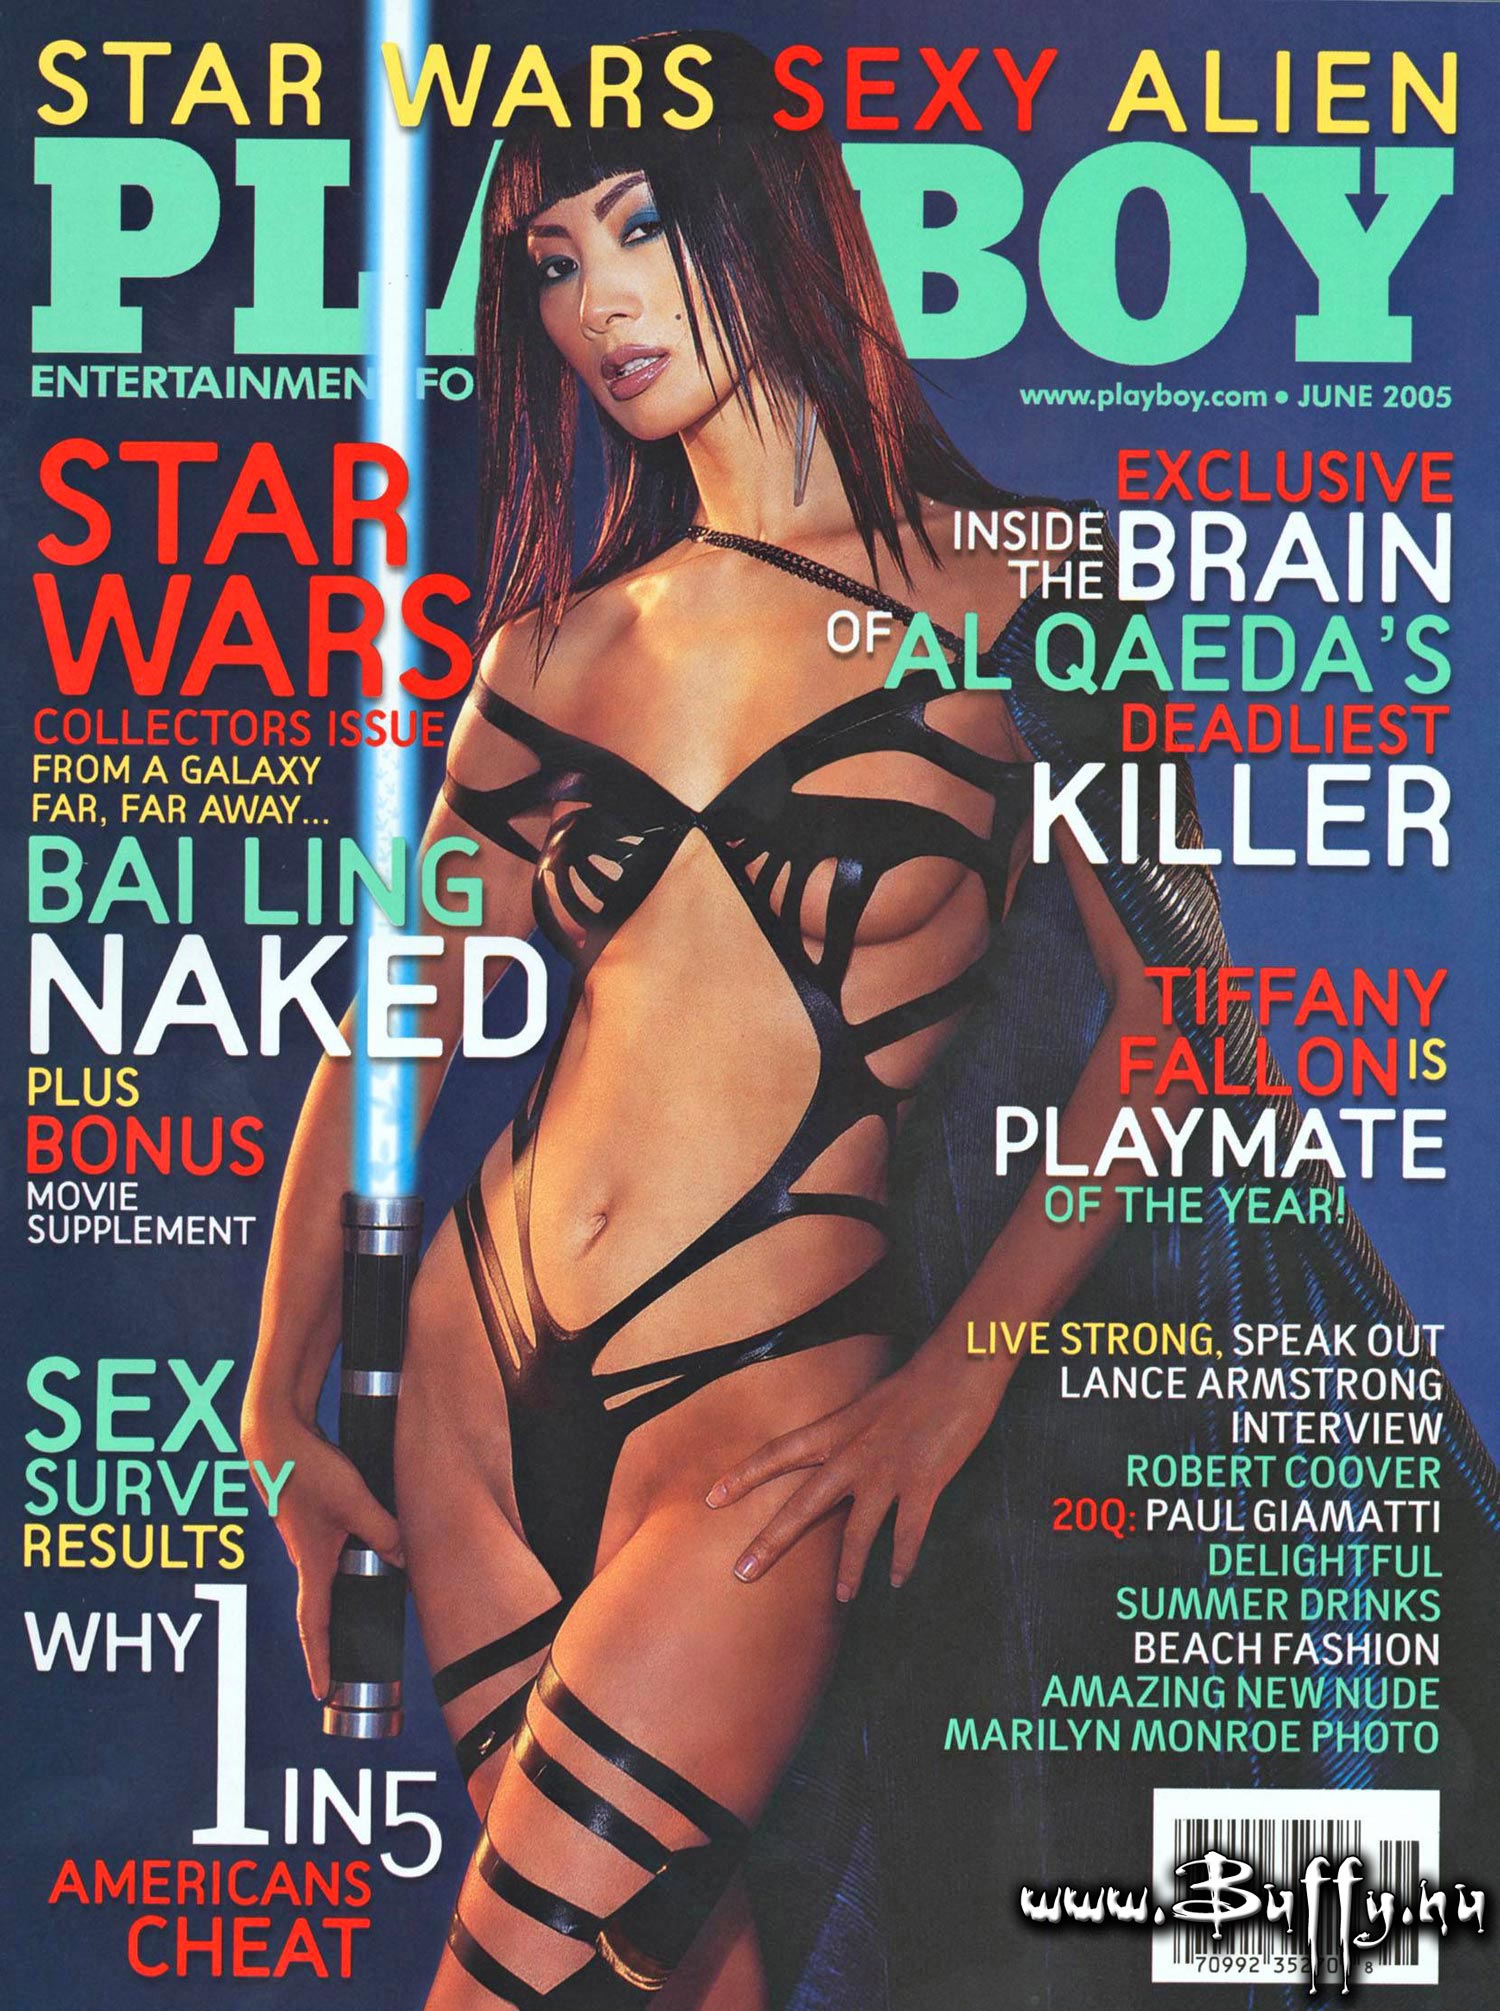 bai-ling-playboy-june-2005-cover-1500.jpg